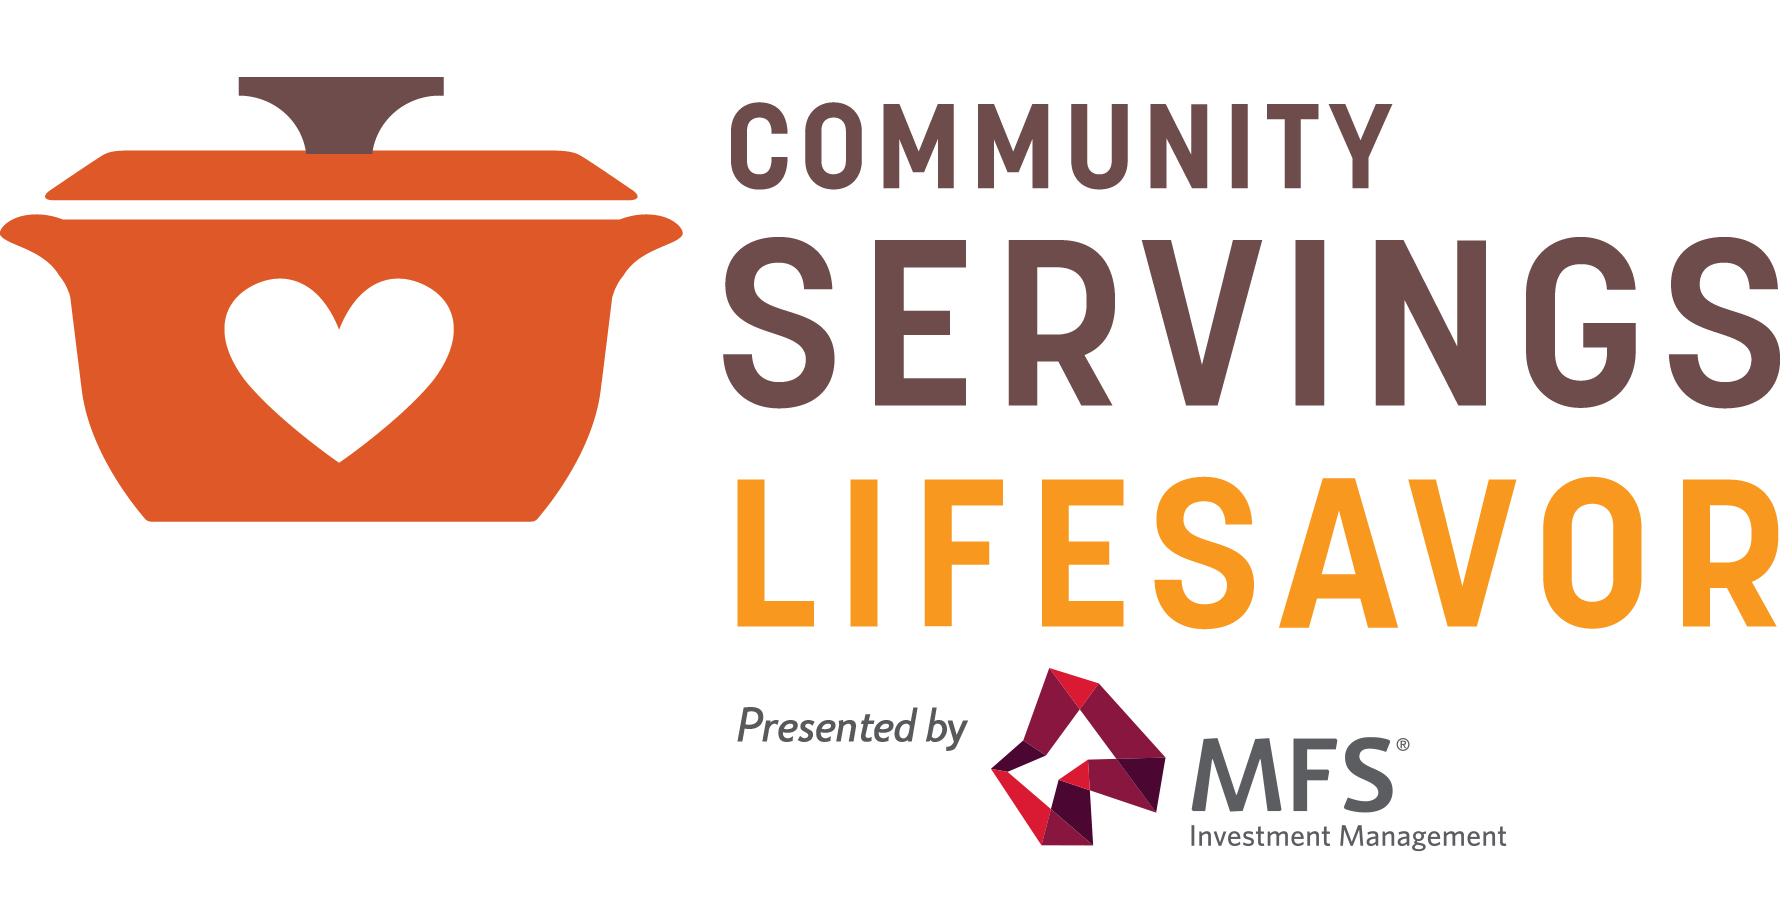 Community Servings. Food heals.